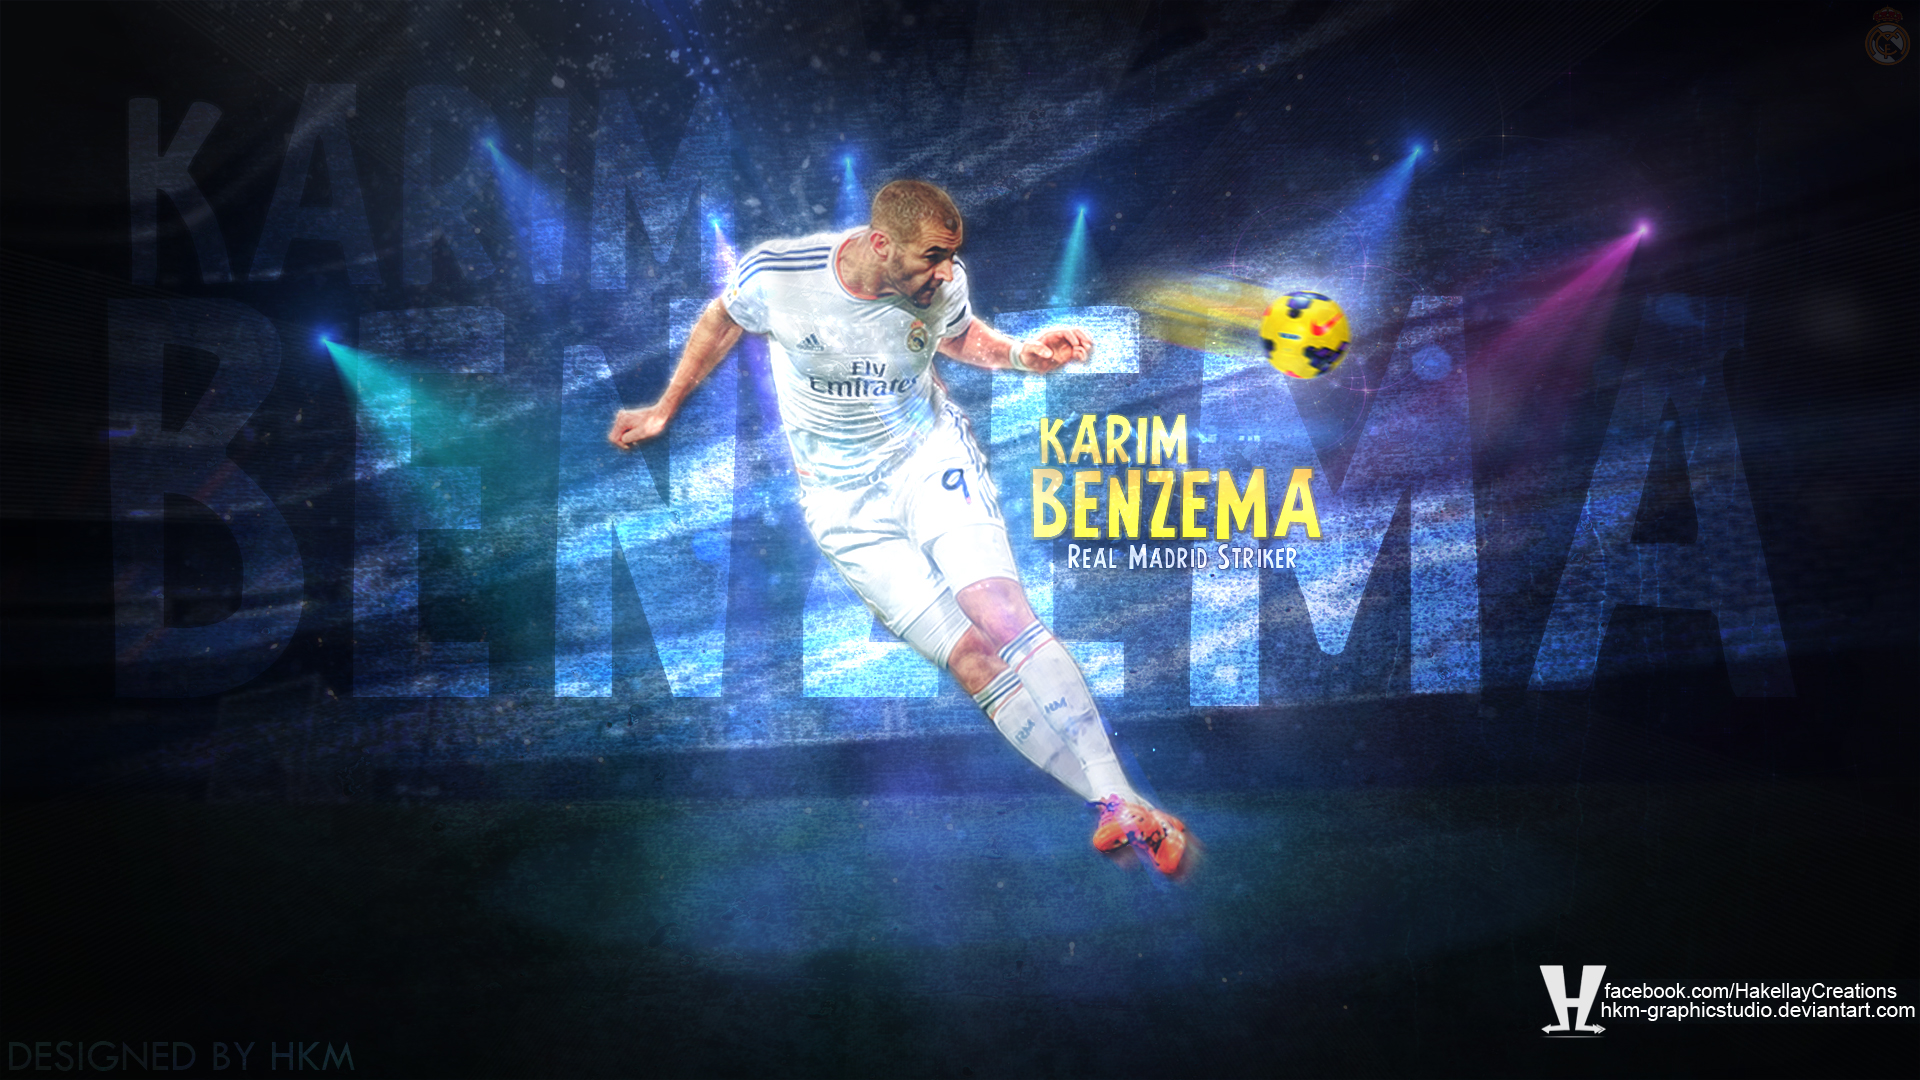 Karim Benzema HD Wallpaper Hkm By Graphicstudio